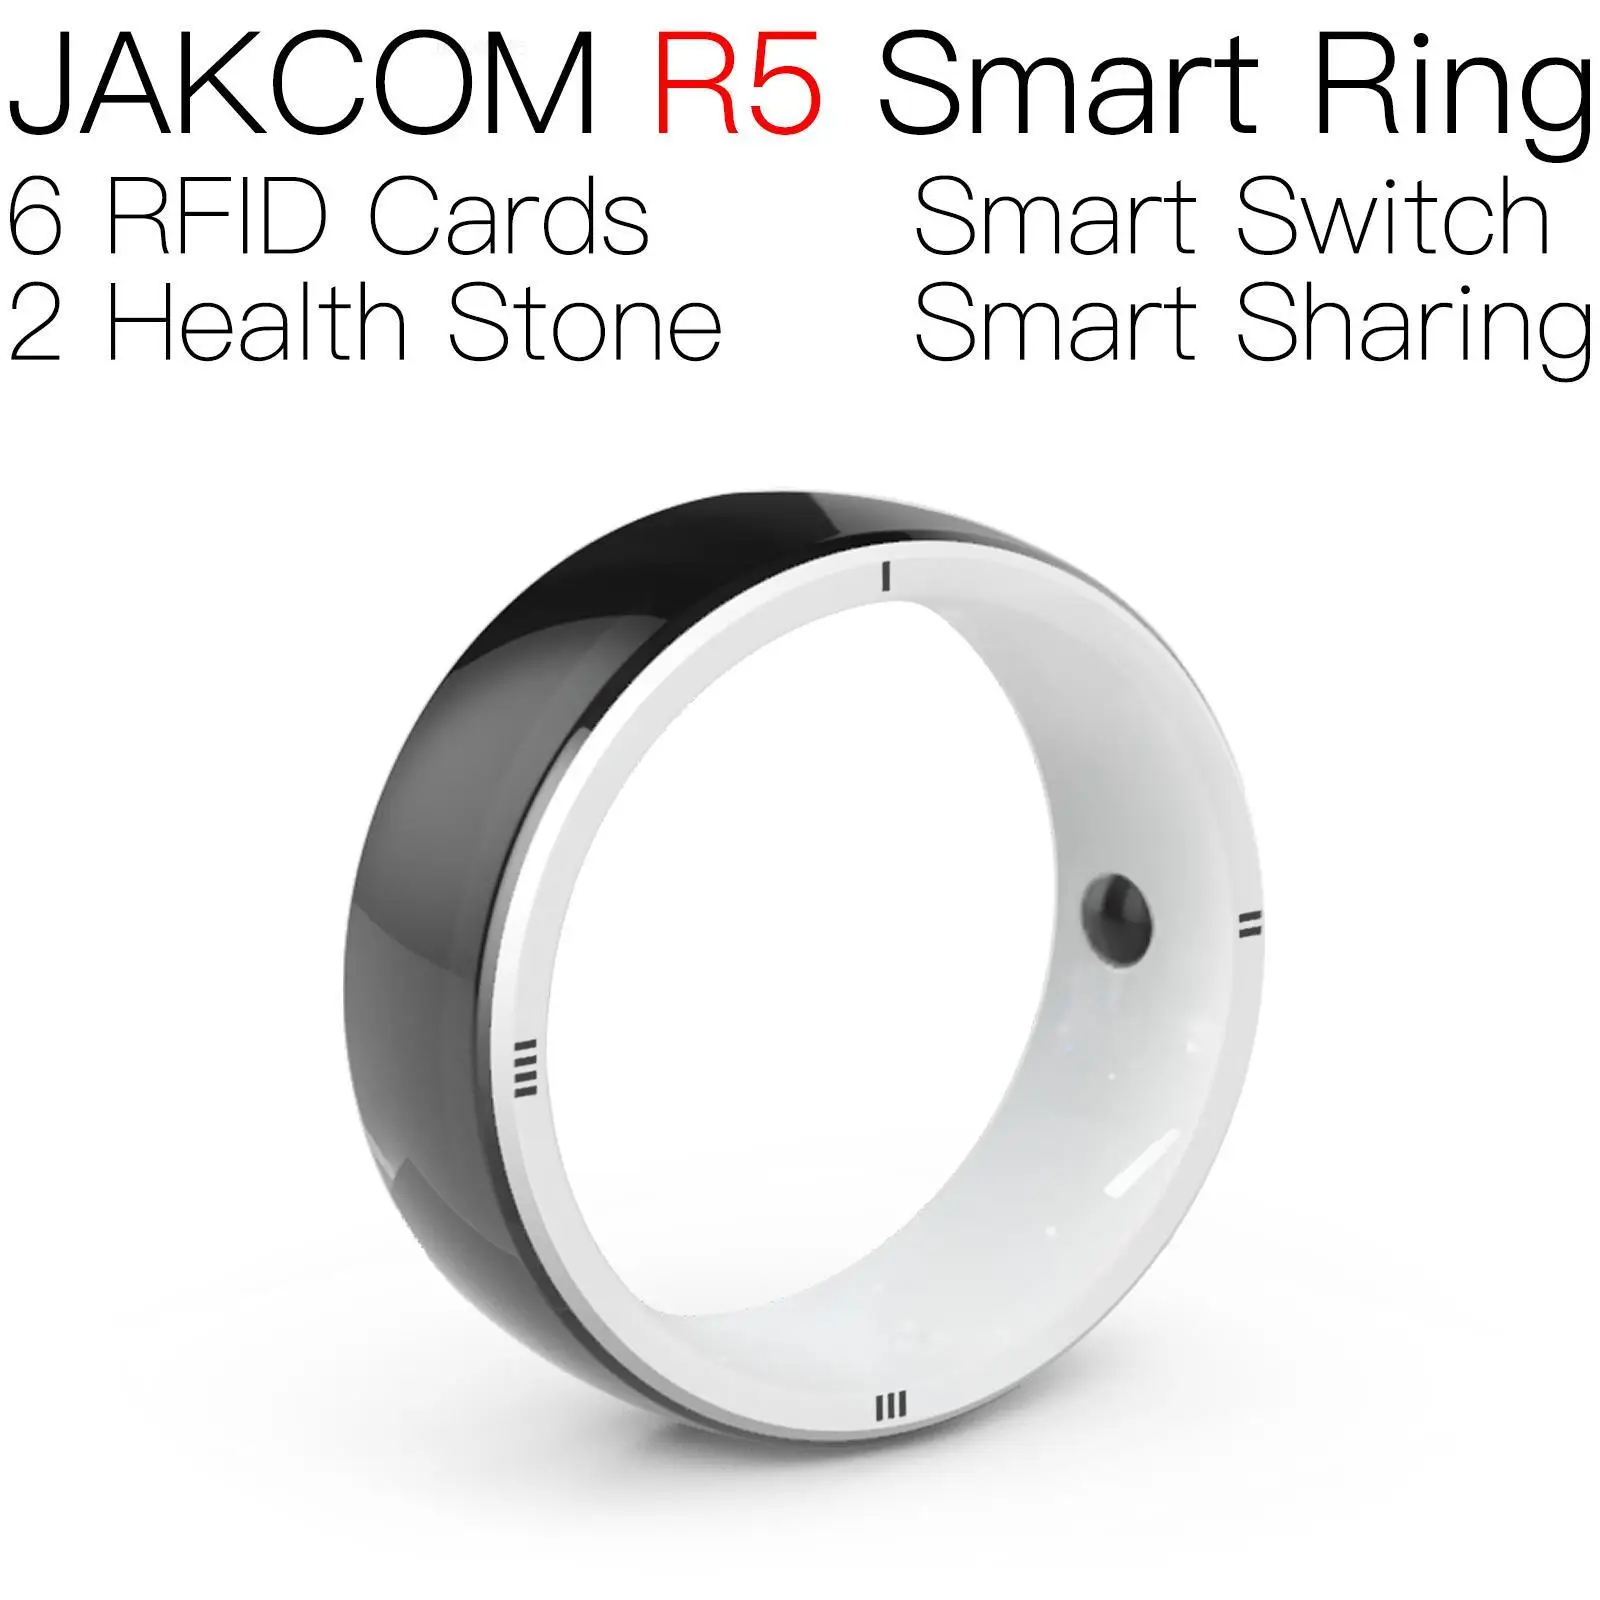 

JAKCOM R5 Smart Ring For men women hr61 card uhf rfid sticker scan db yellow tag nfc call mobile light